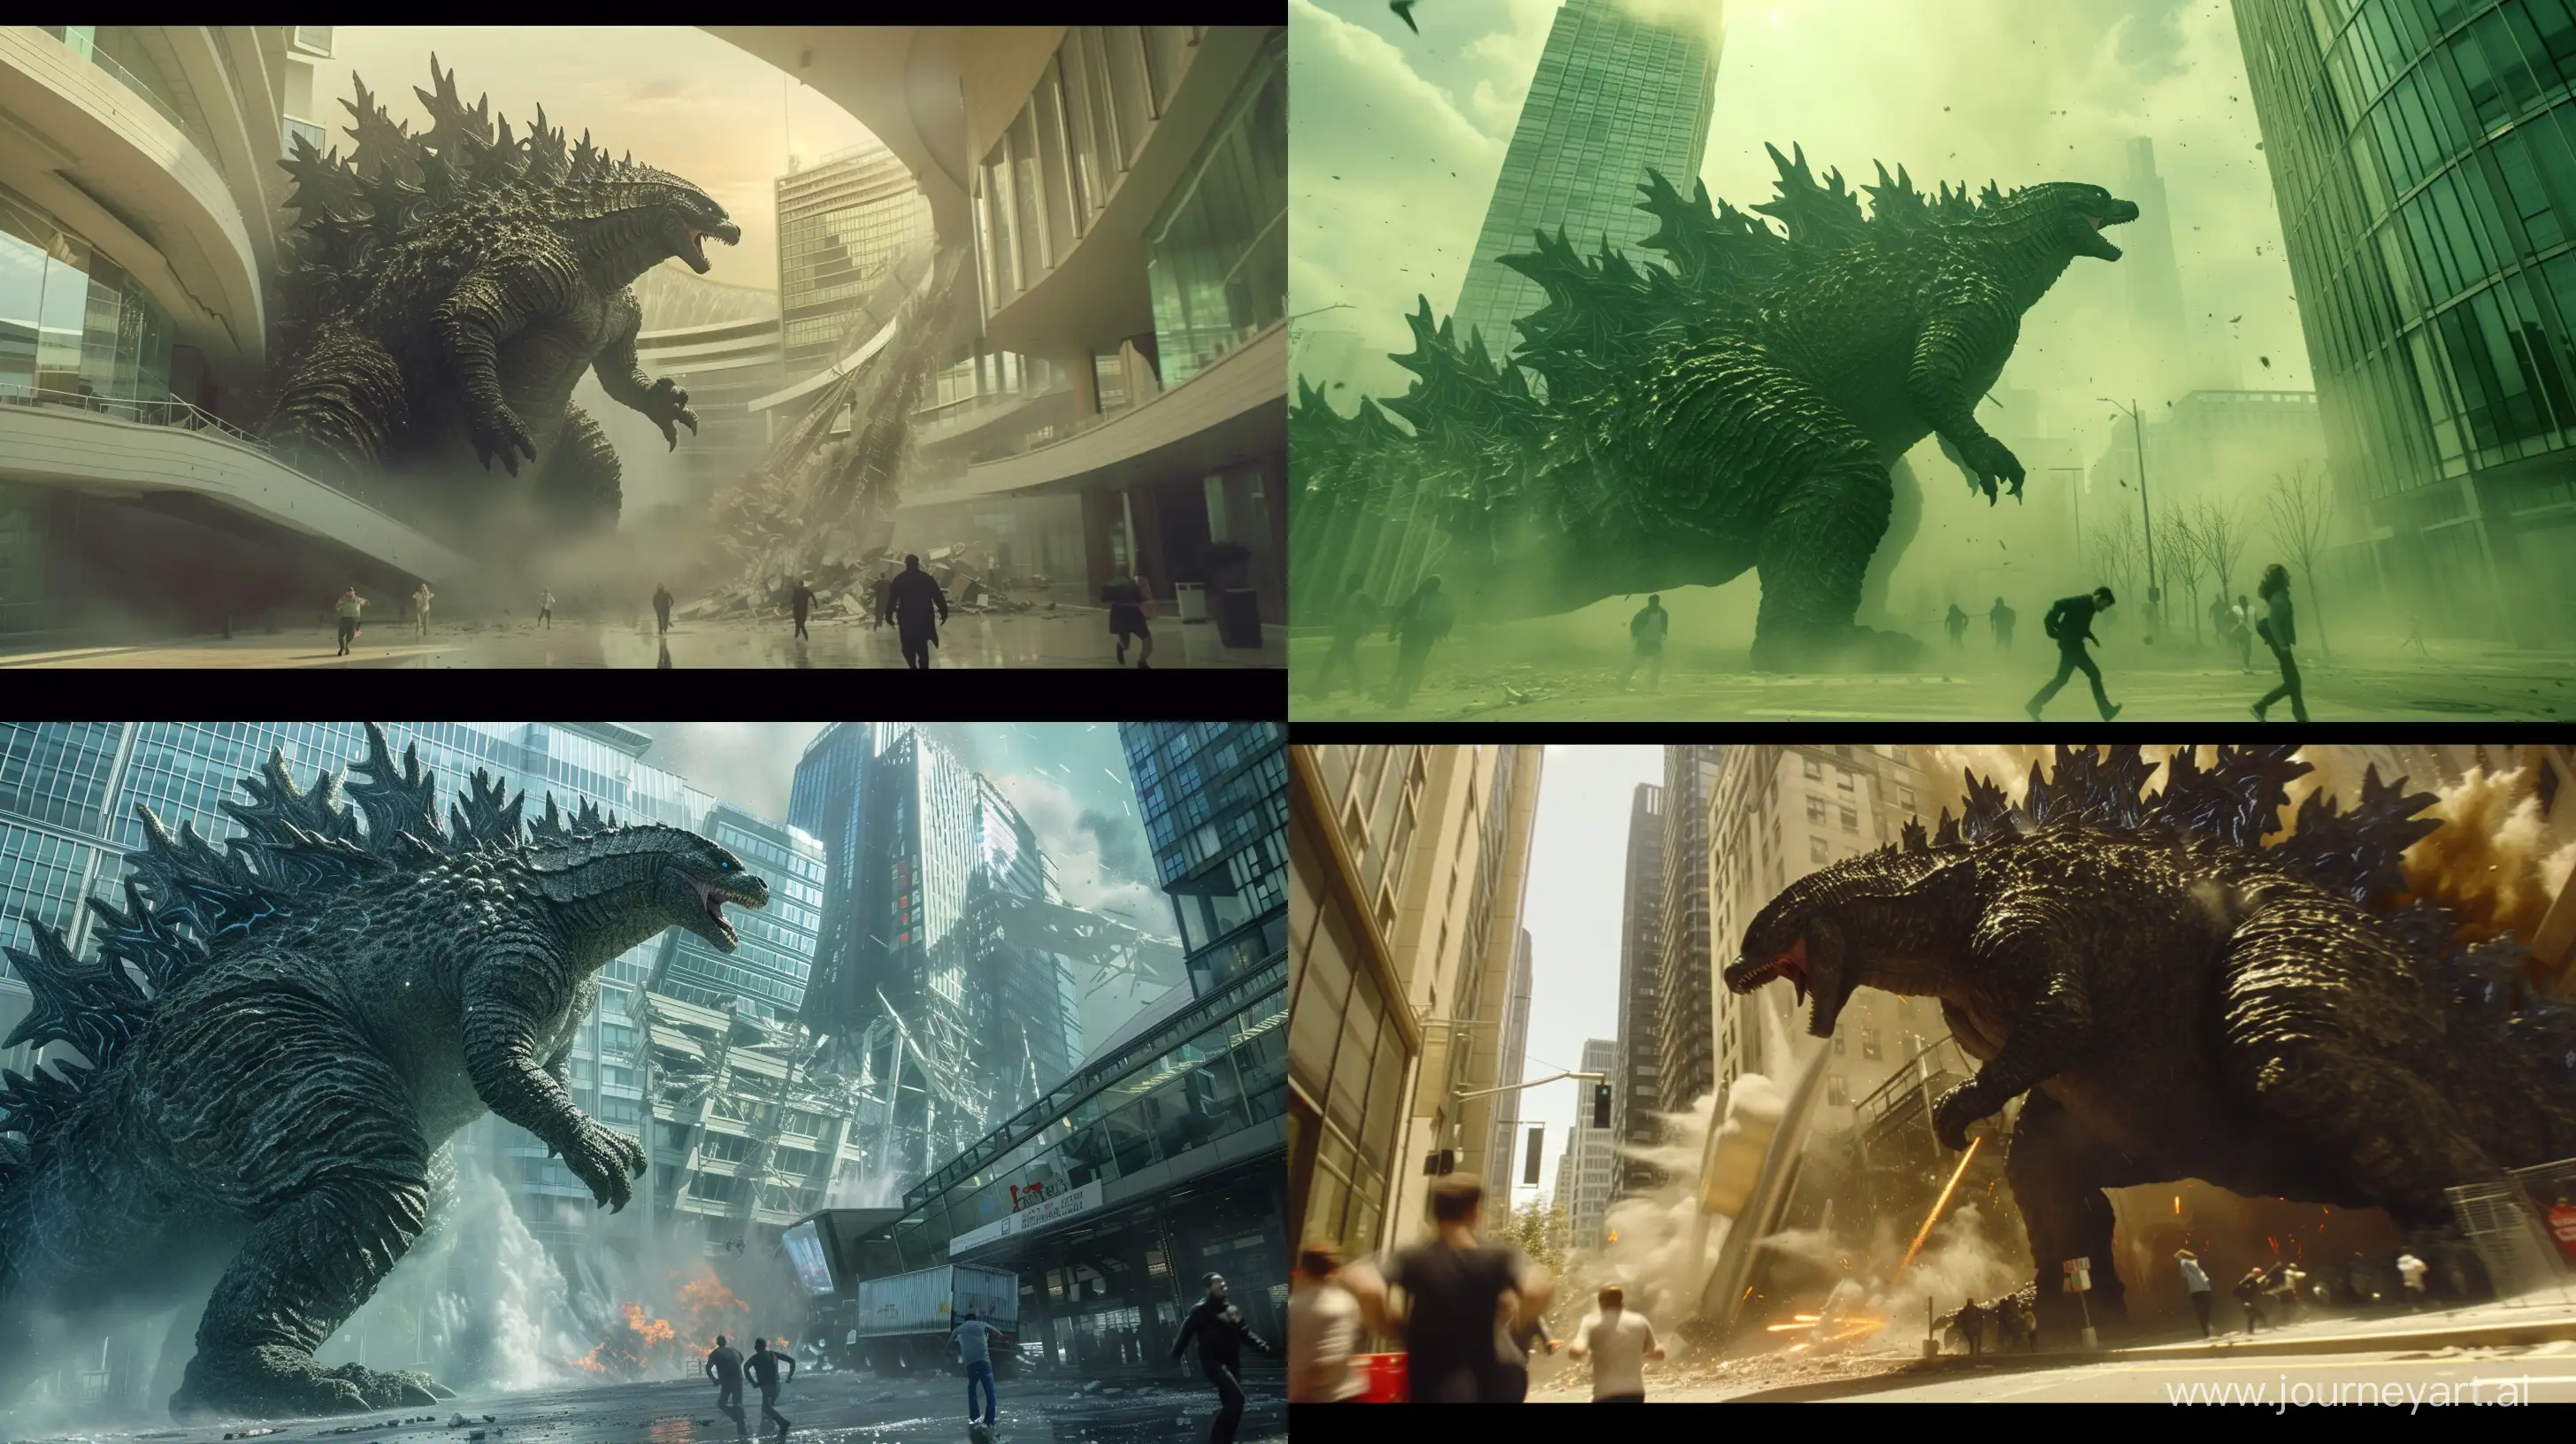 cinematic still, ultra wide angle, Godzilla rampaging through a modern city, building destruction, people running, kaiju chaos --ar 16:9